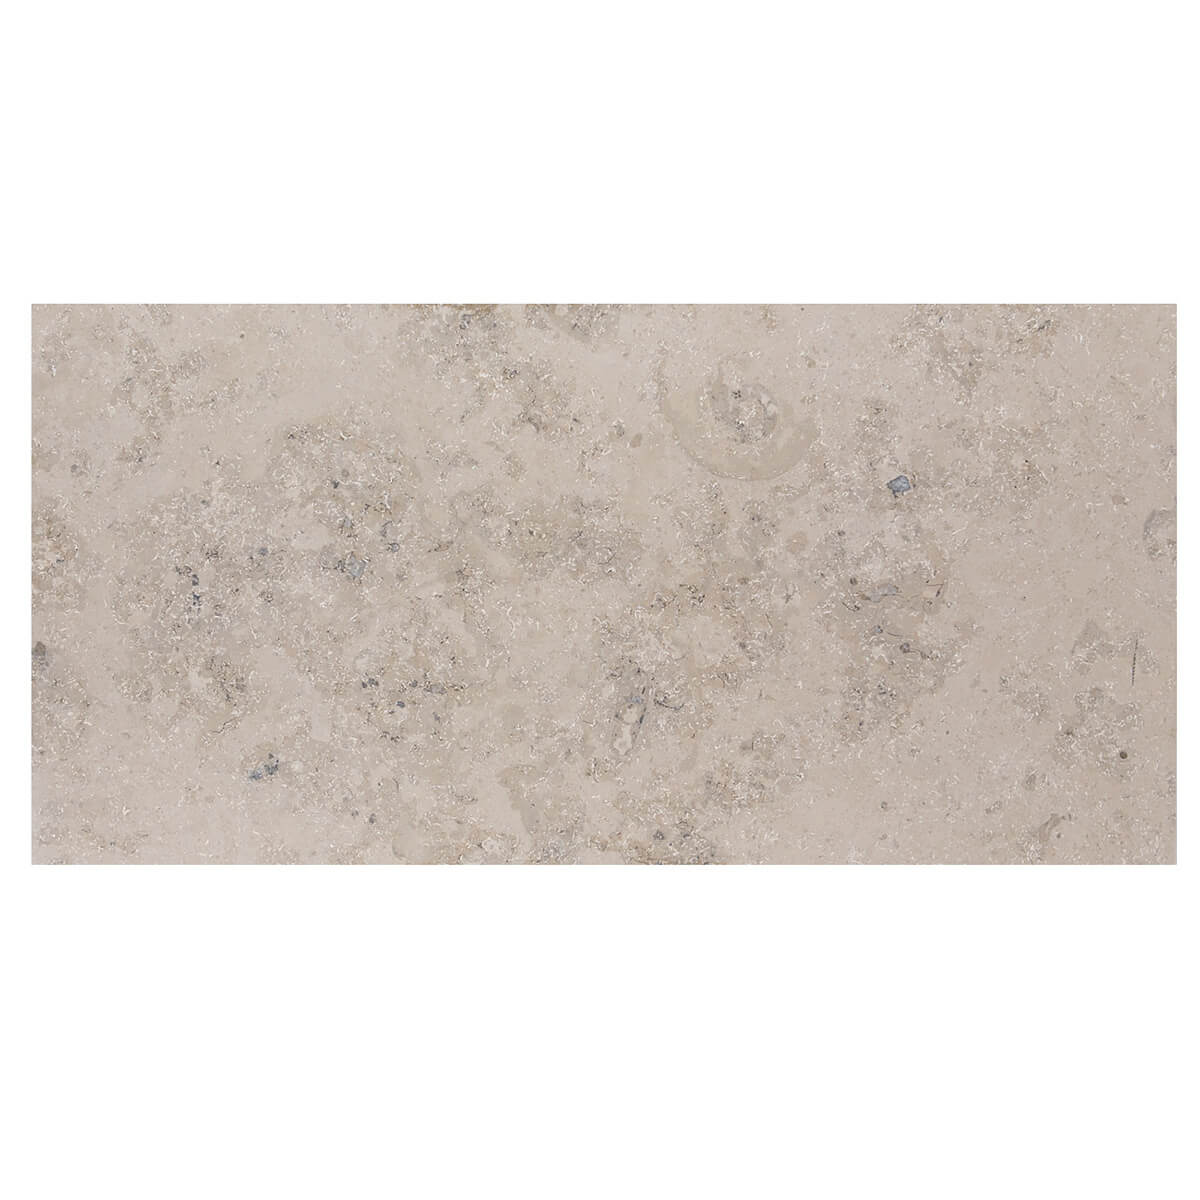 haussmann jura grey limestone rectangle natural stone field tile 12x24 honed